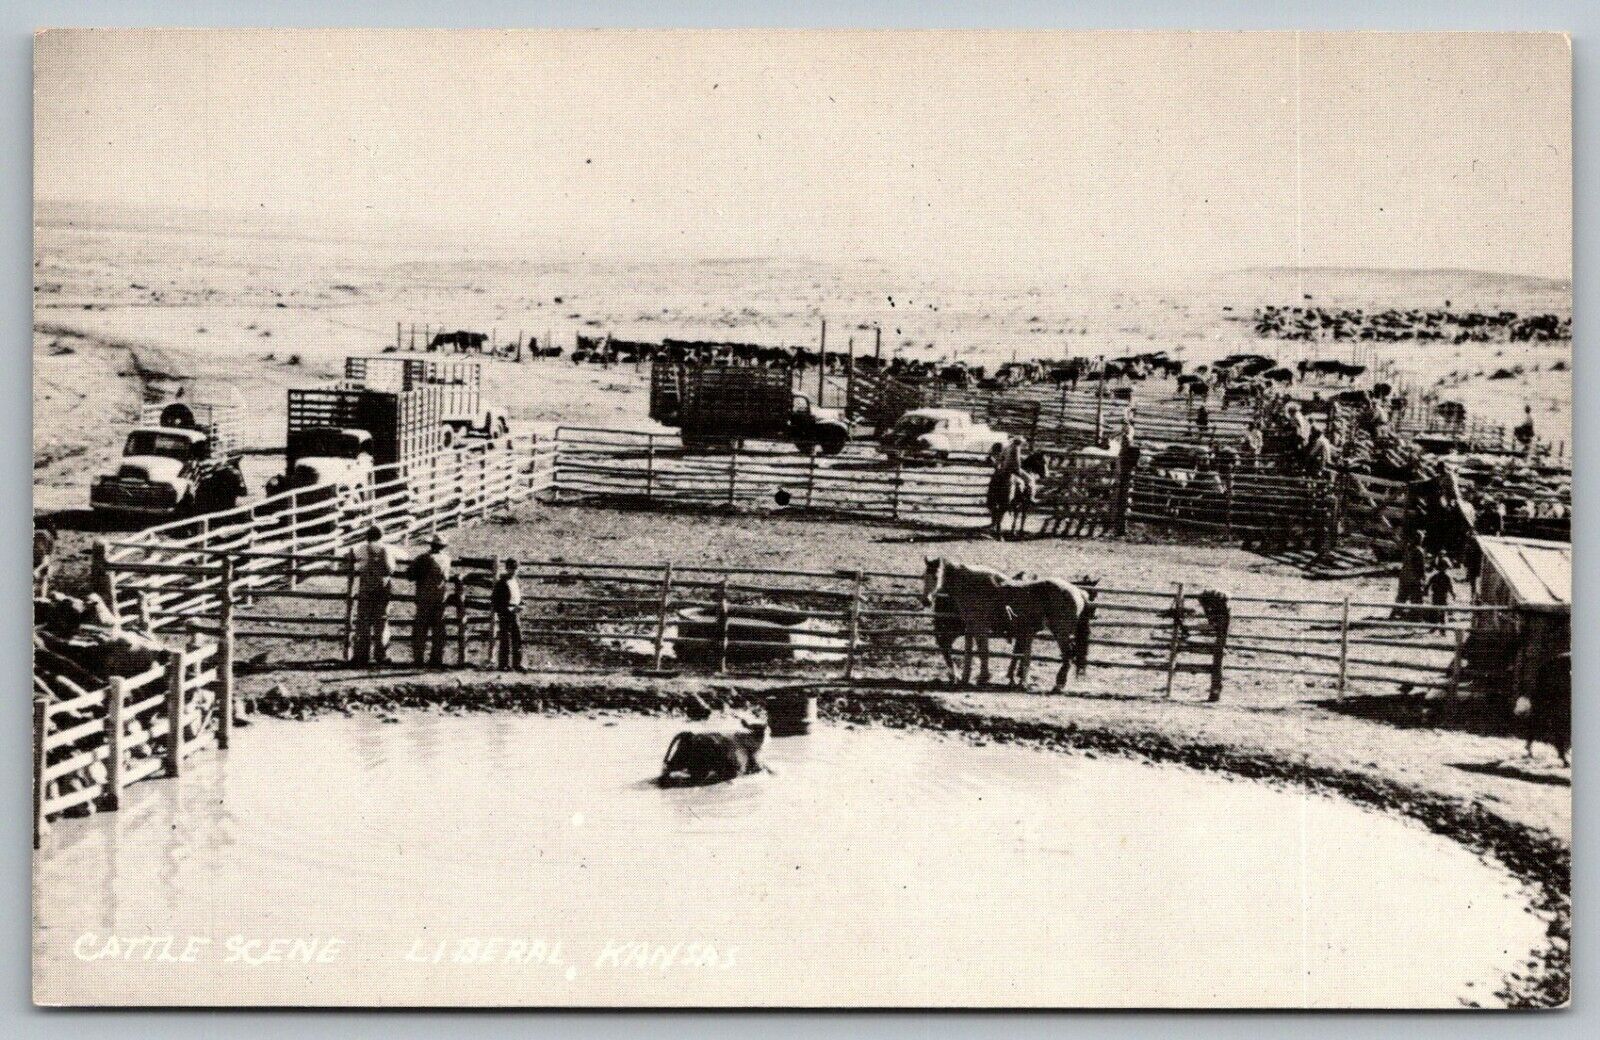 Liberal Kansas~Range~Cattle in Pens~Cow in Water Hole~Open Air Trucks~1940s B&W 